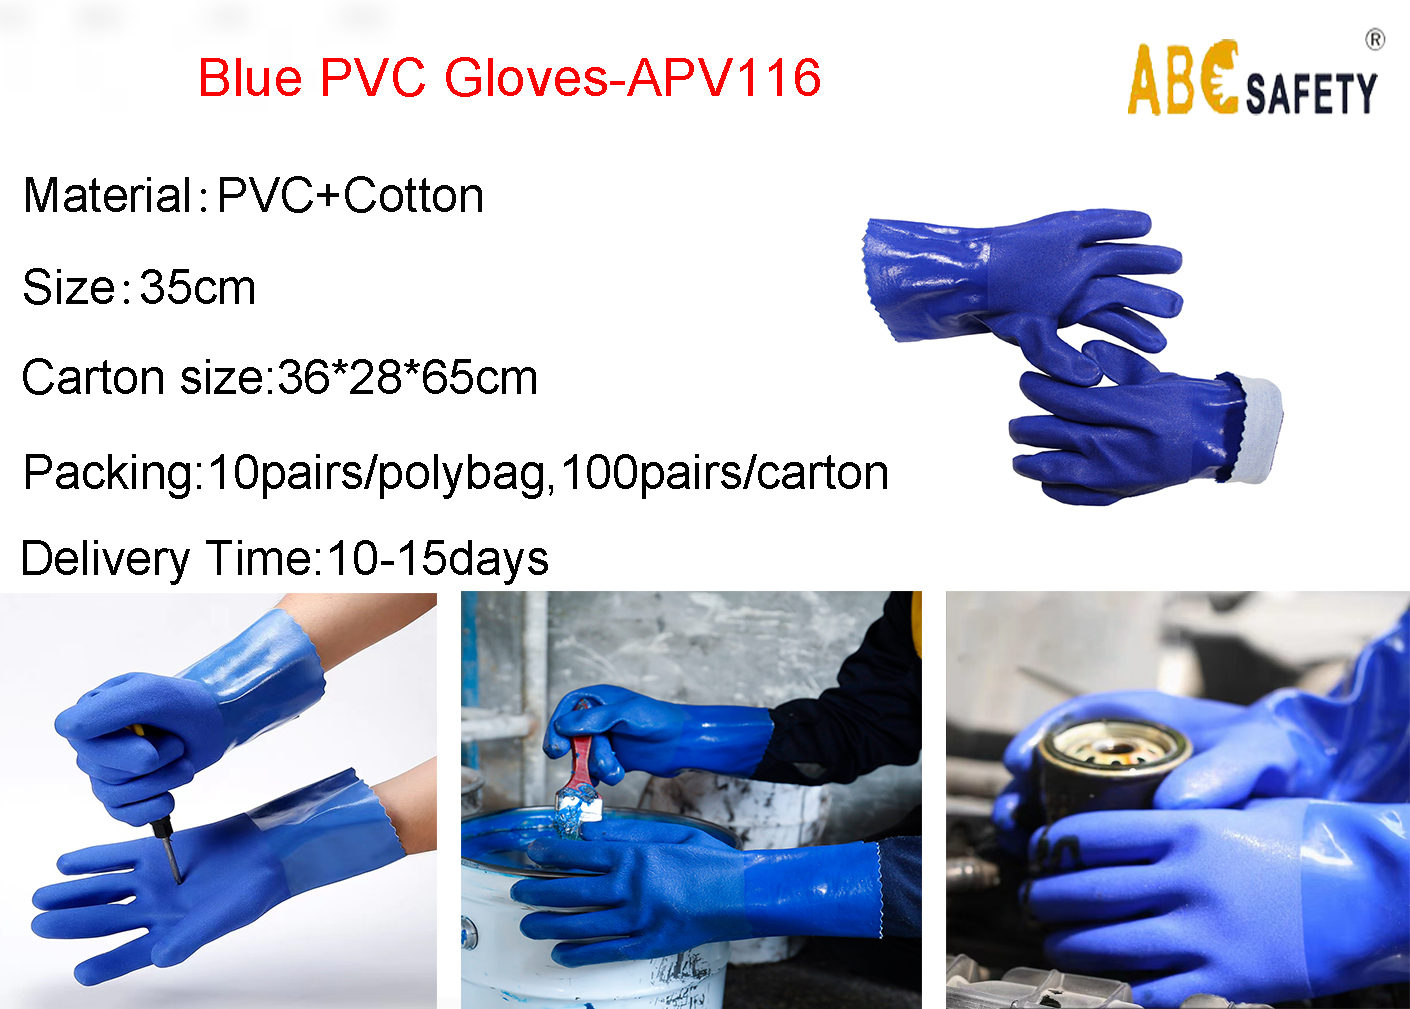 Blue PVC industrial gloves - APV116